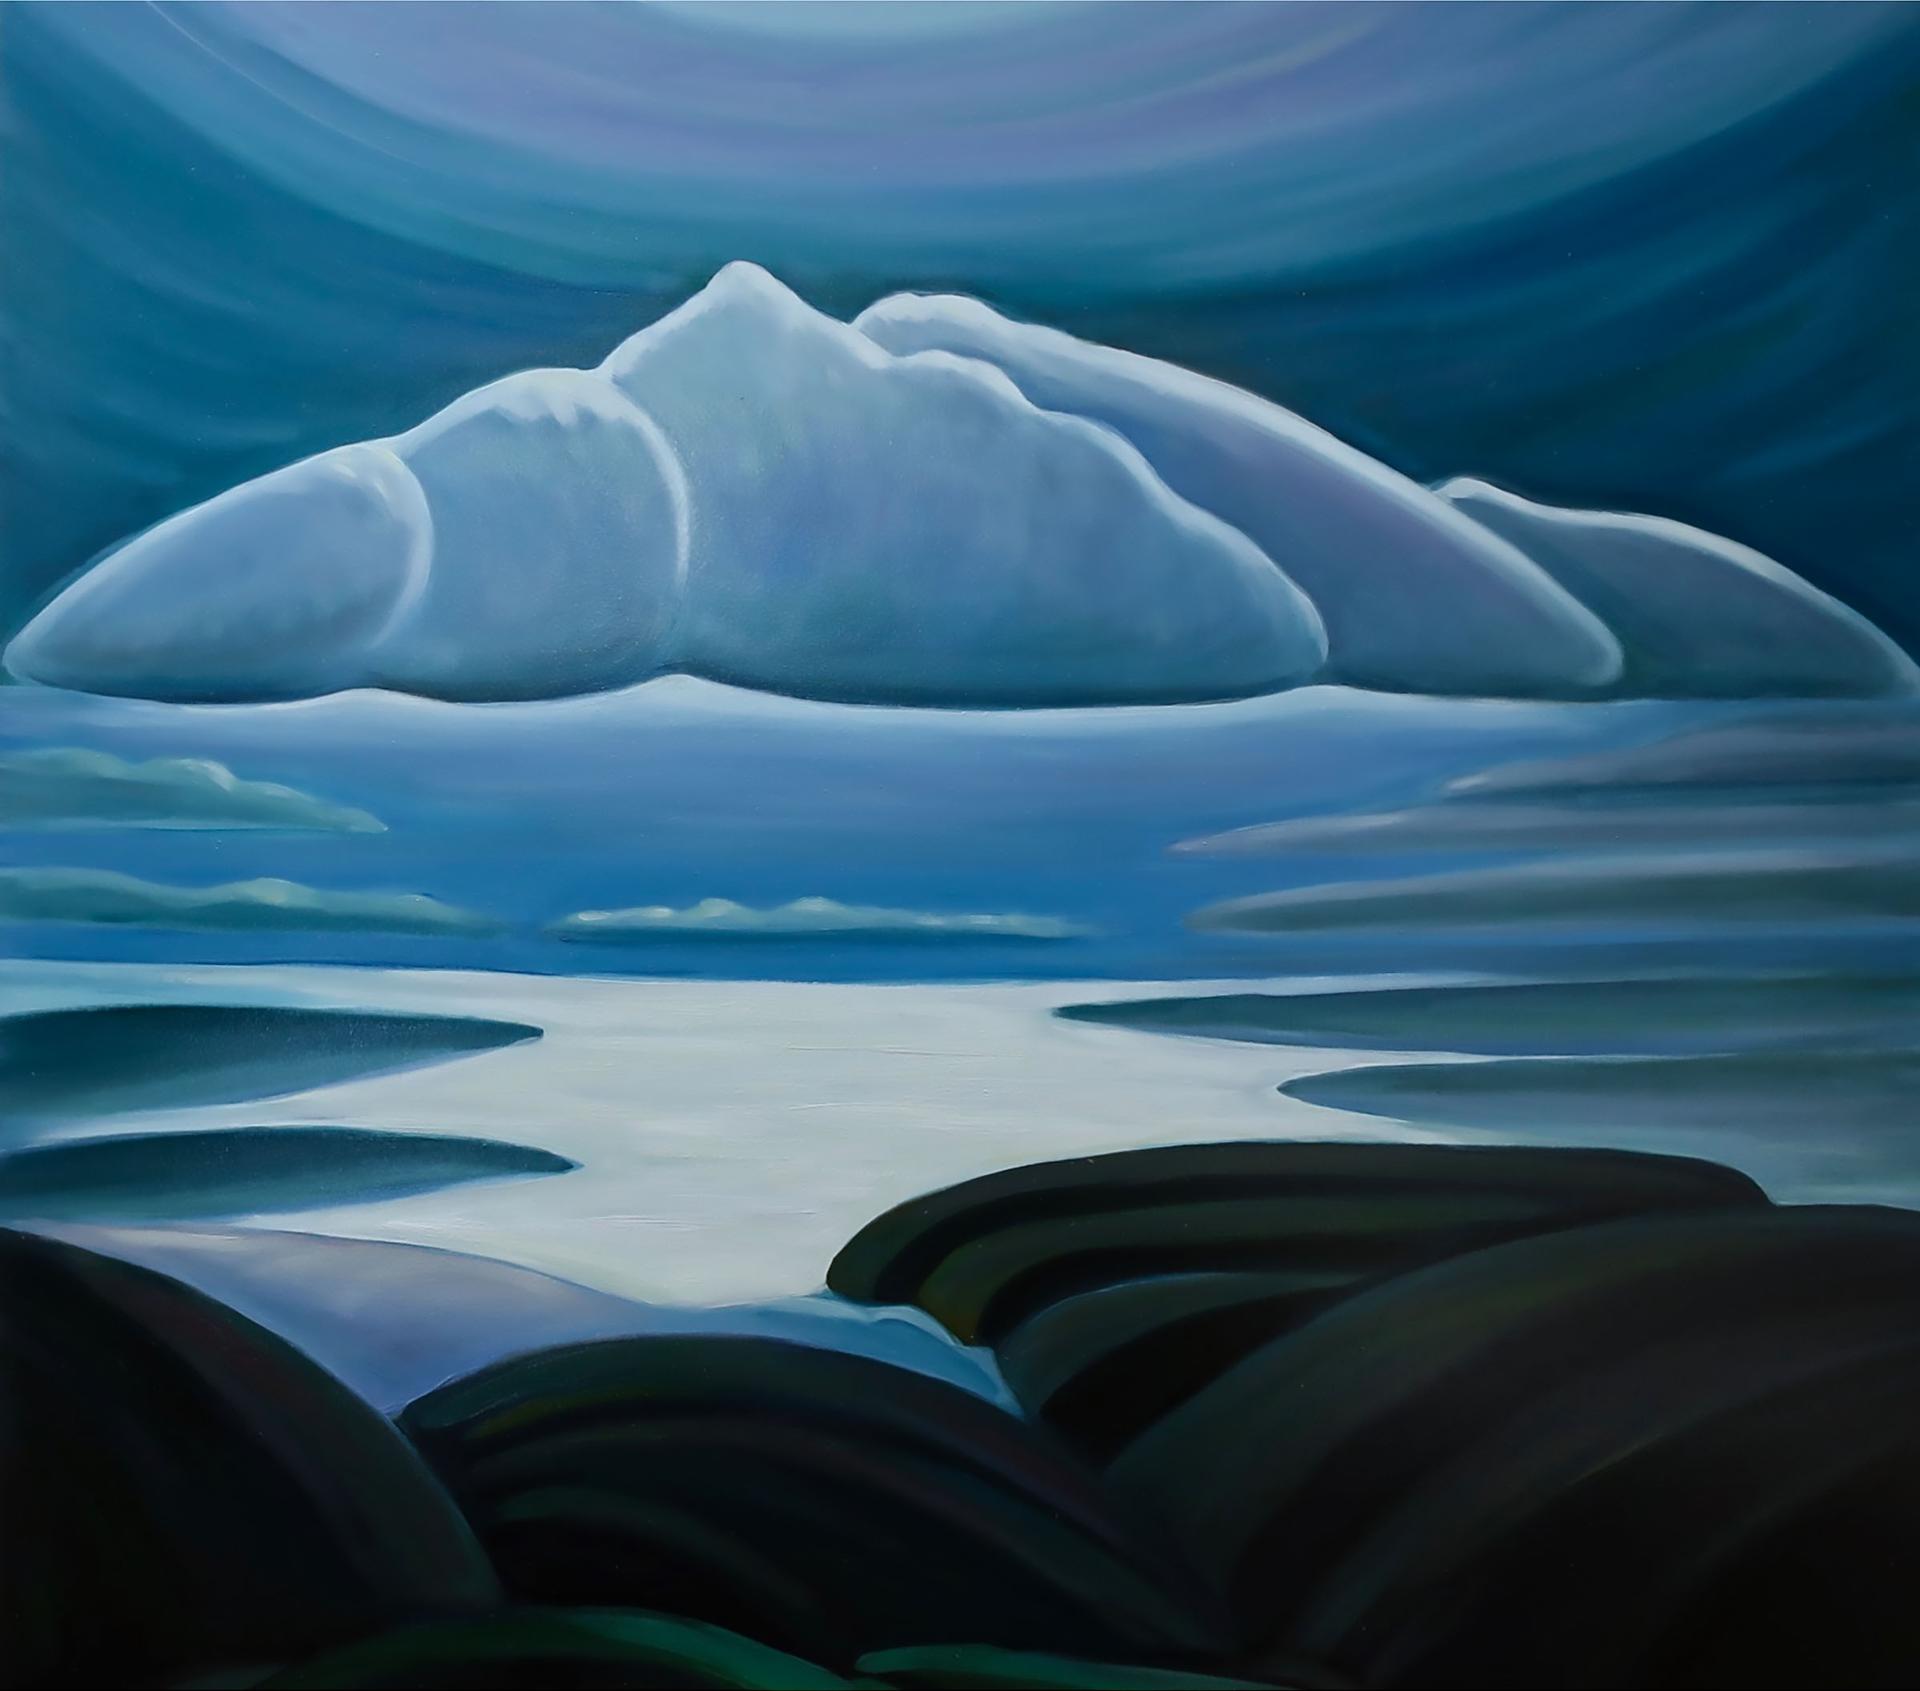 Serge Deherian (1955) - Clouds, Lake Superior